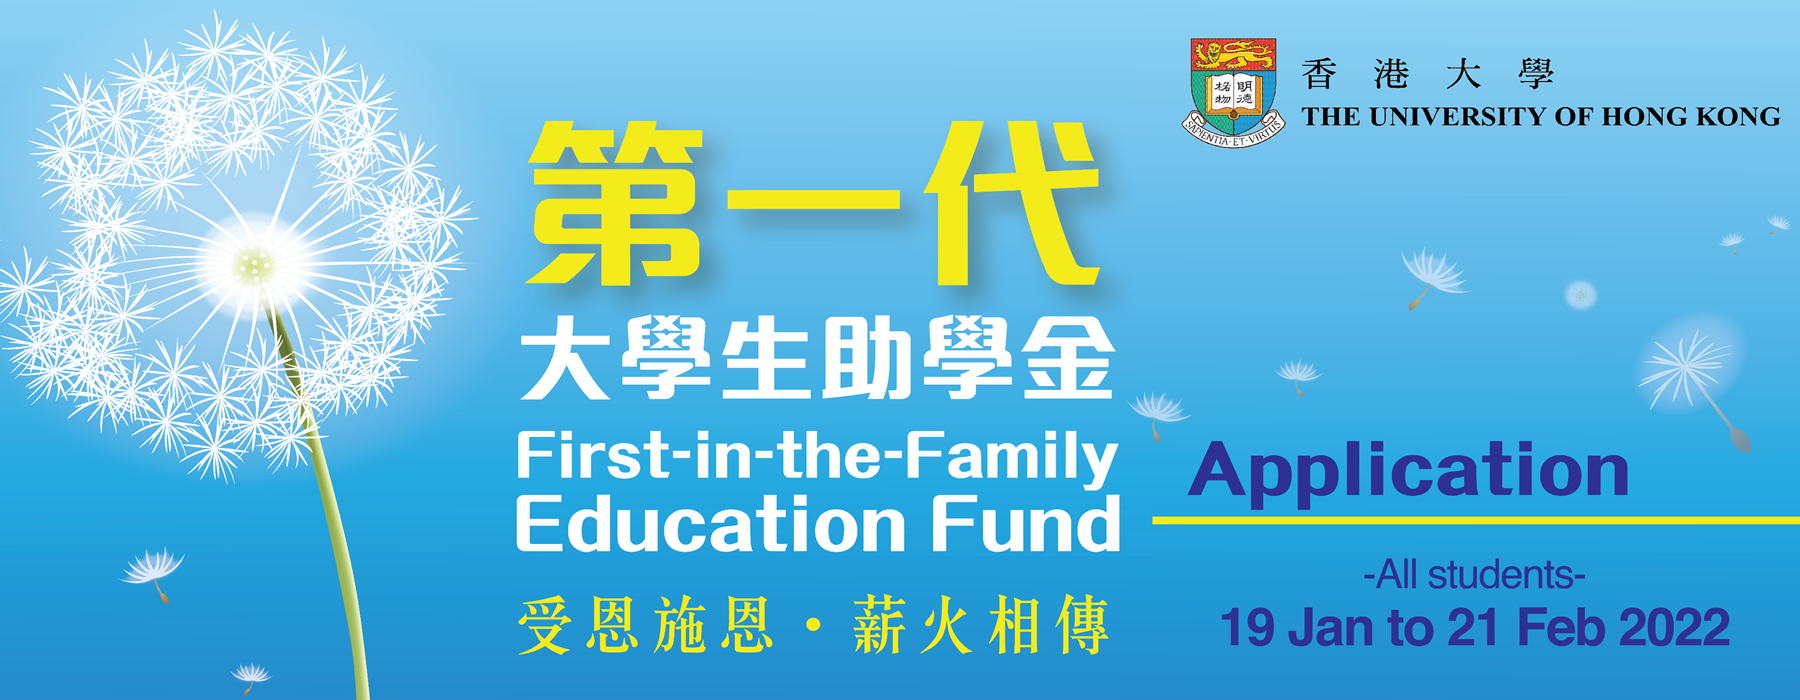 FIFE Fund 2021-22 Round II - Application opens until 21 Feb 2022